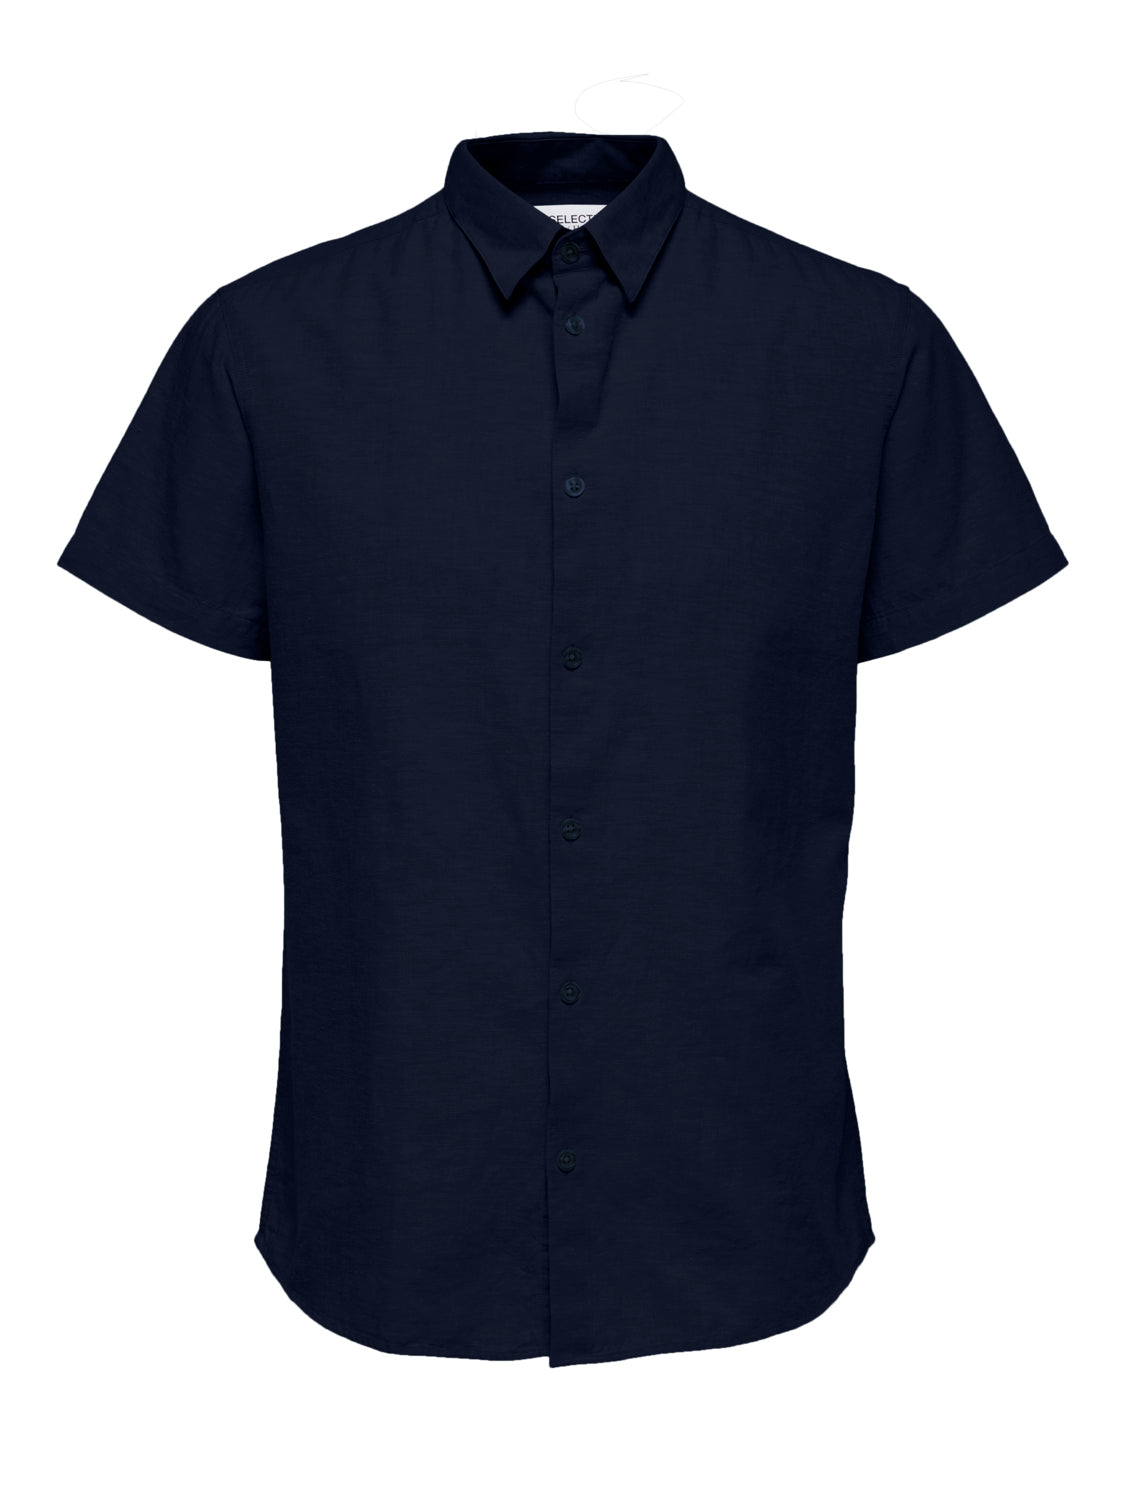 REG NEW-LINEN Shirts - Navy Blazer